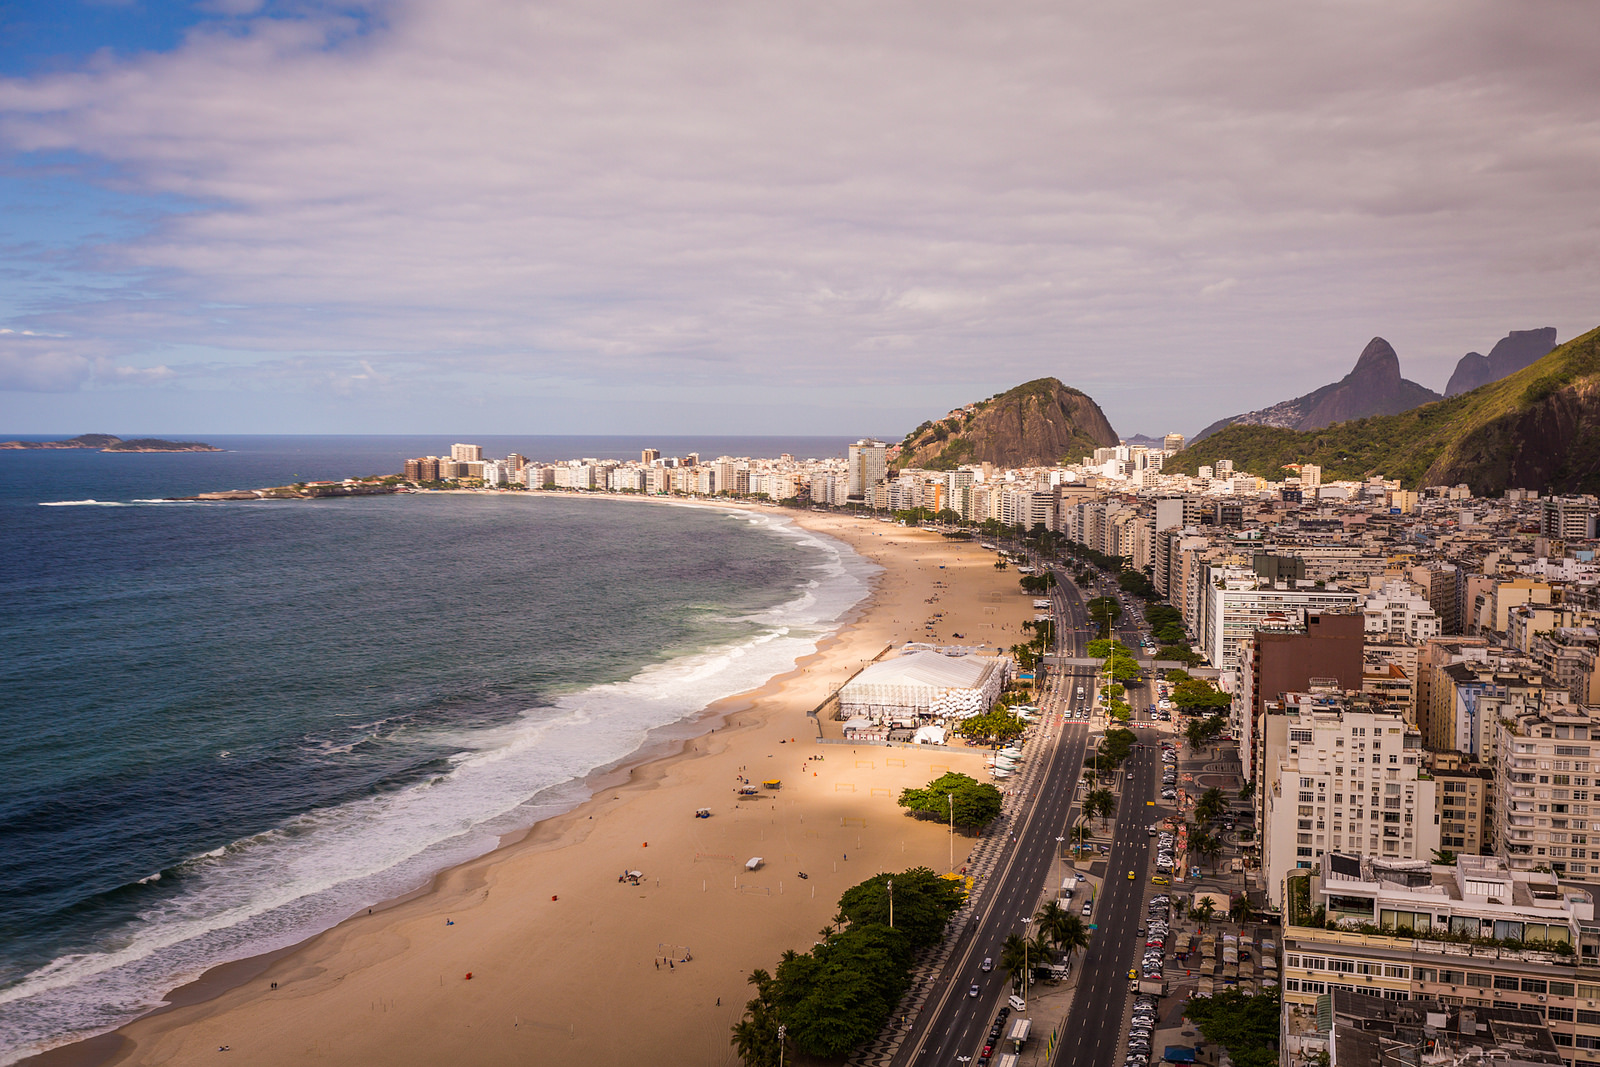 A long view of Rio. Photo: Ryan Lash